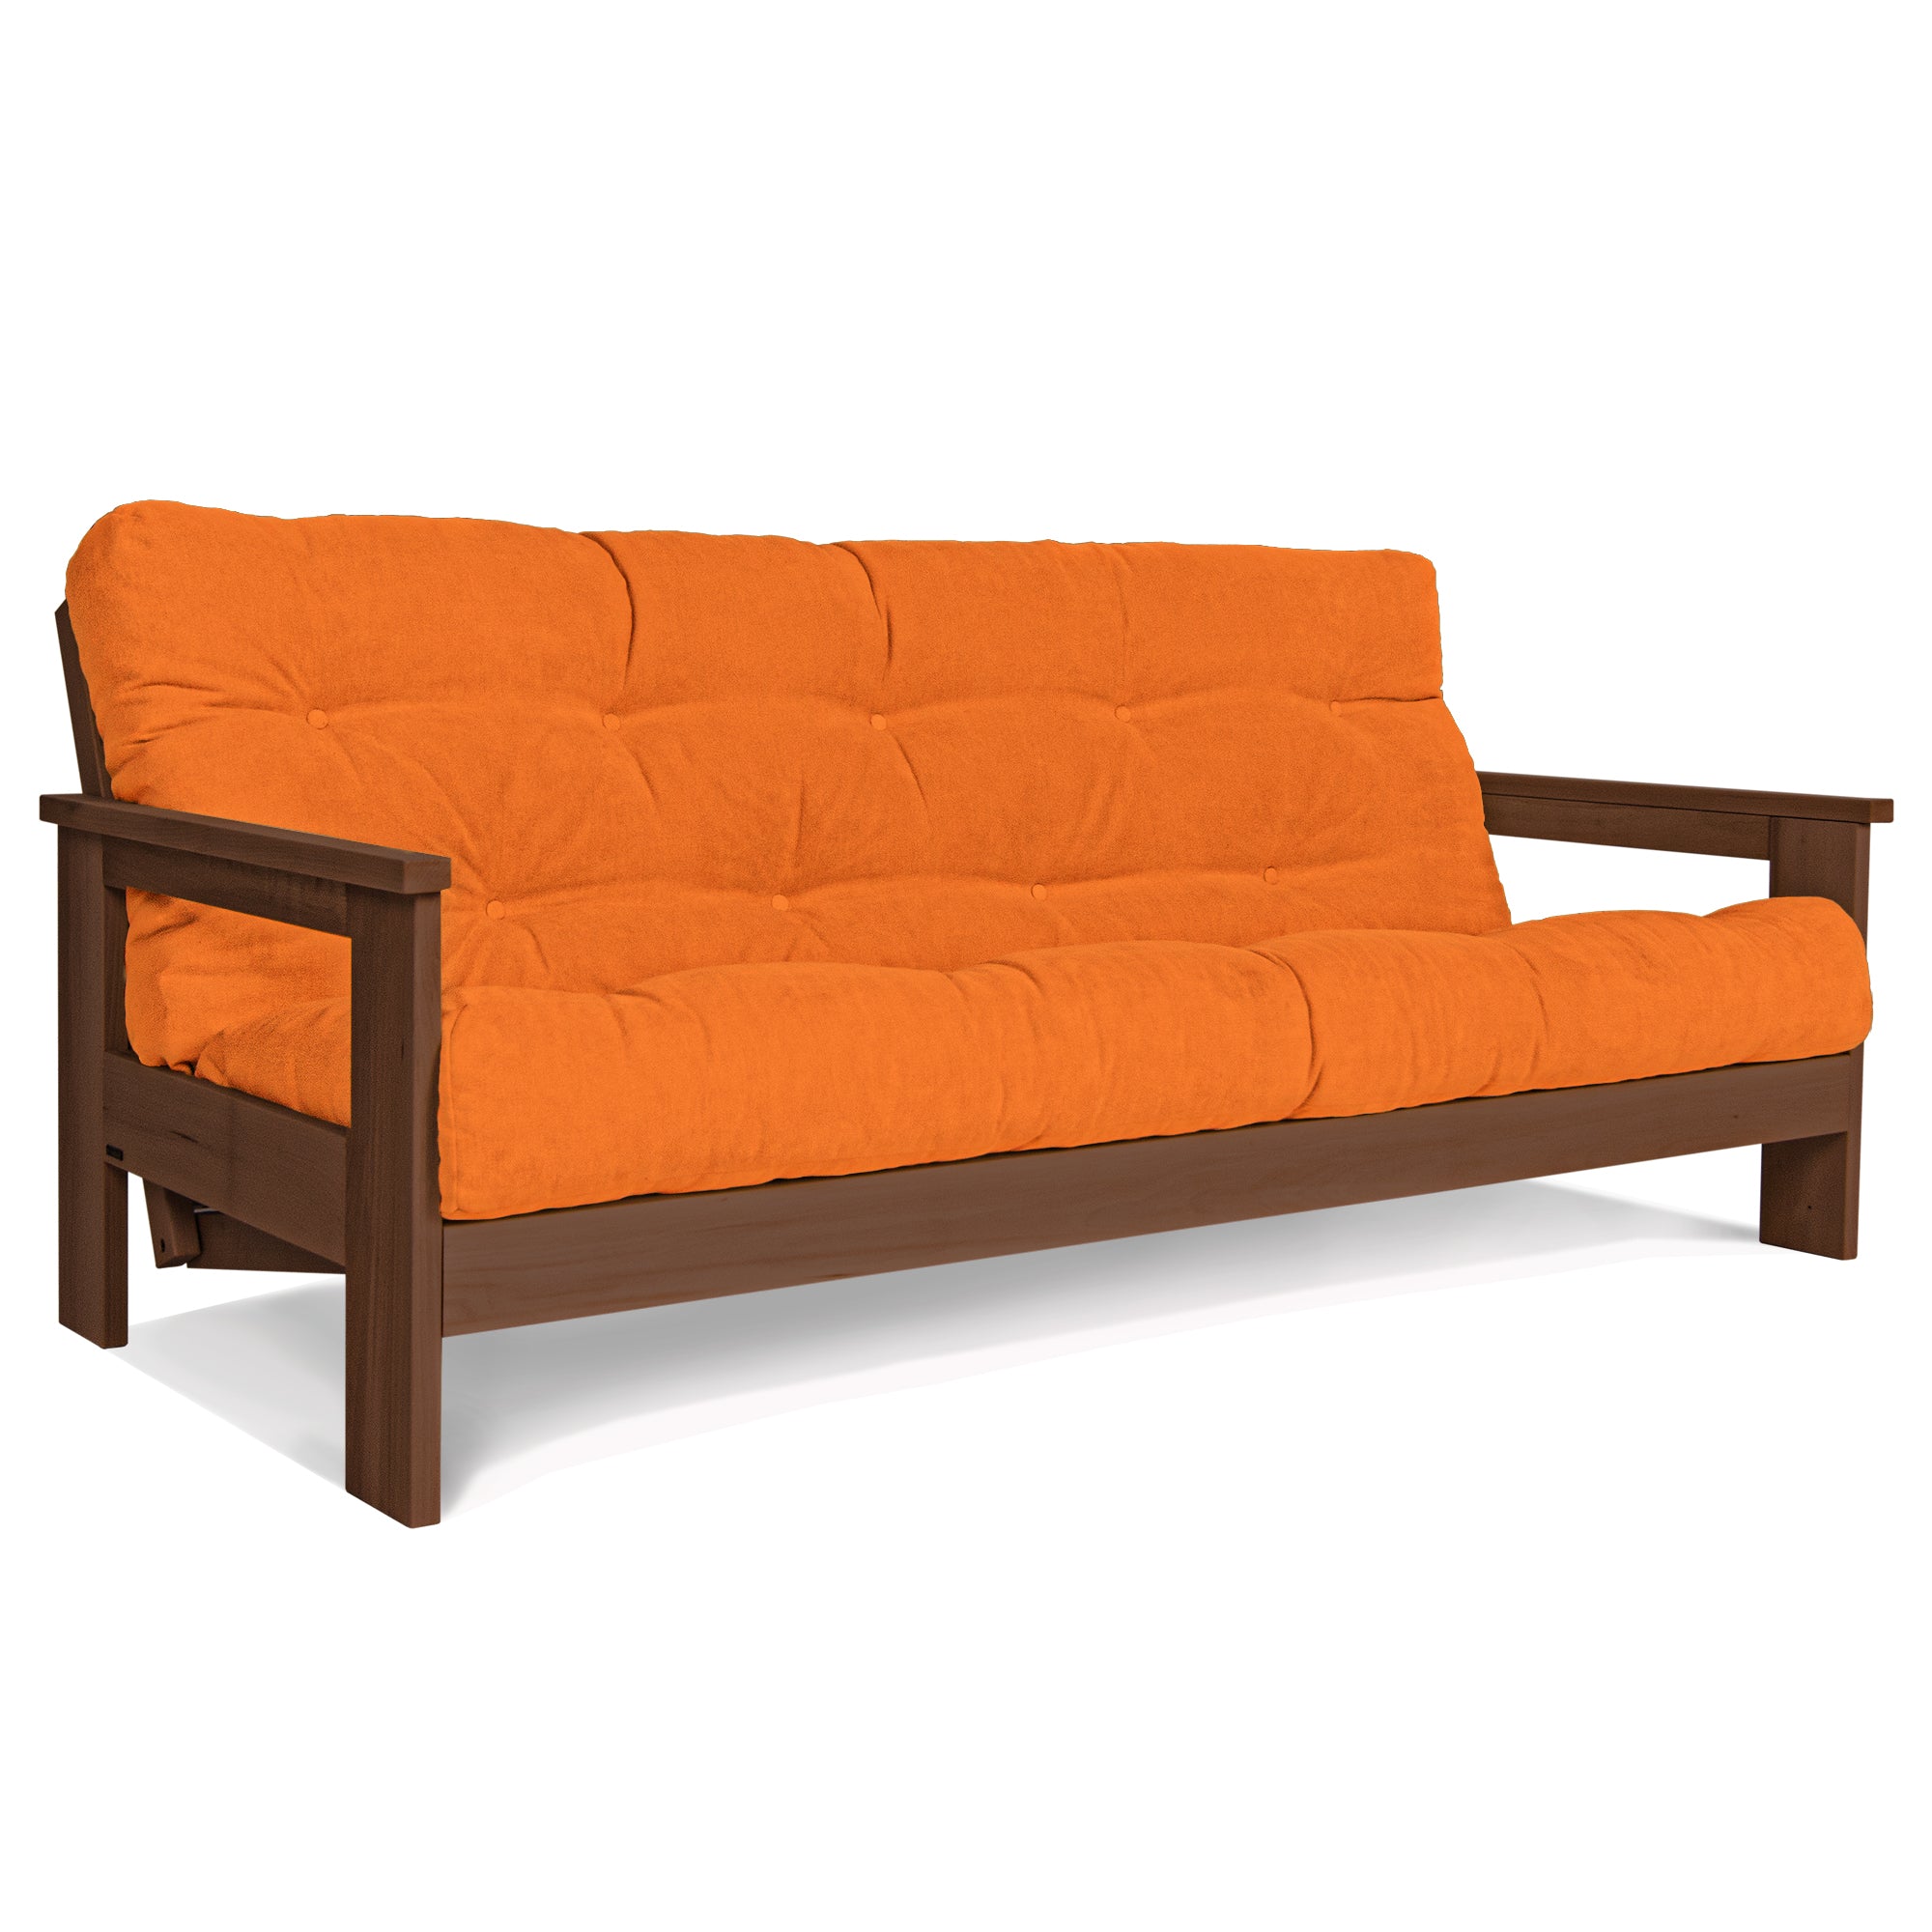 MEXICO Folding Sofa Bed-Beech Wood Frame-Walnut Colour-gray fabric colour-orange fabric colour